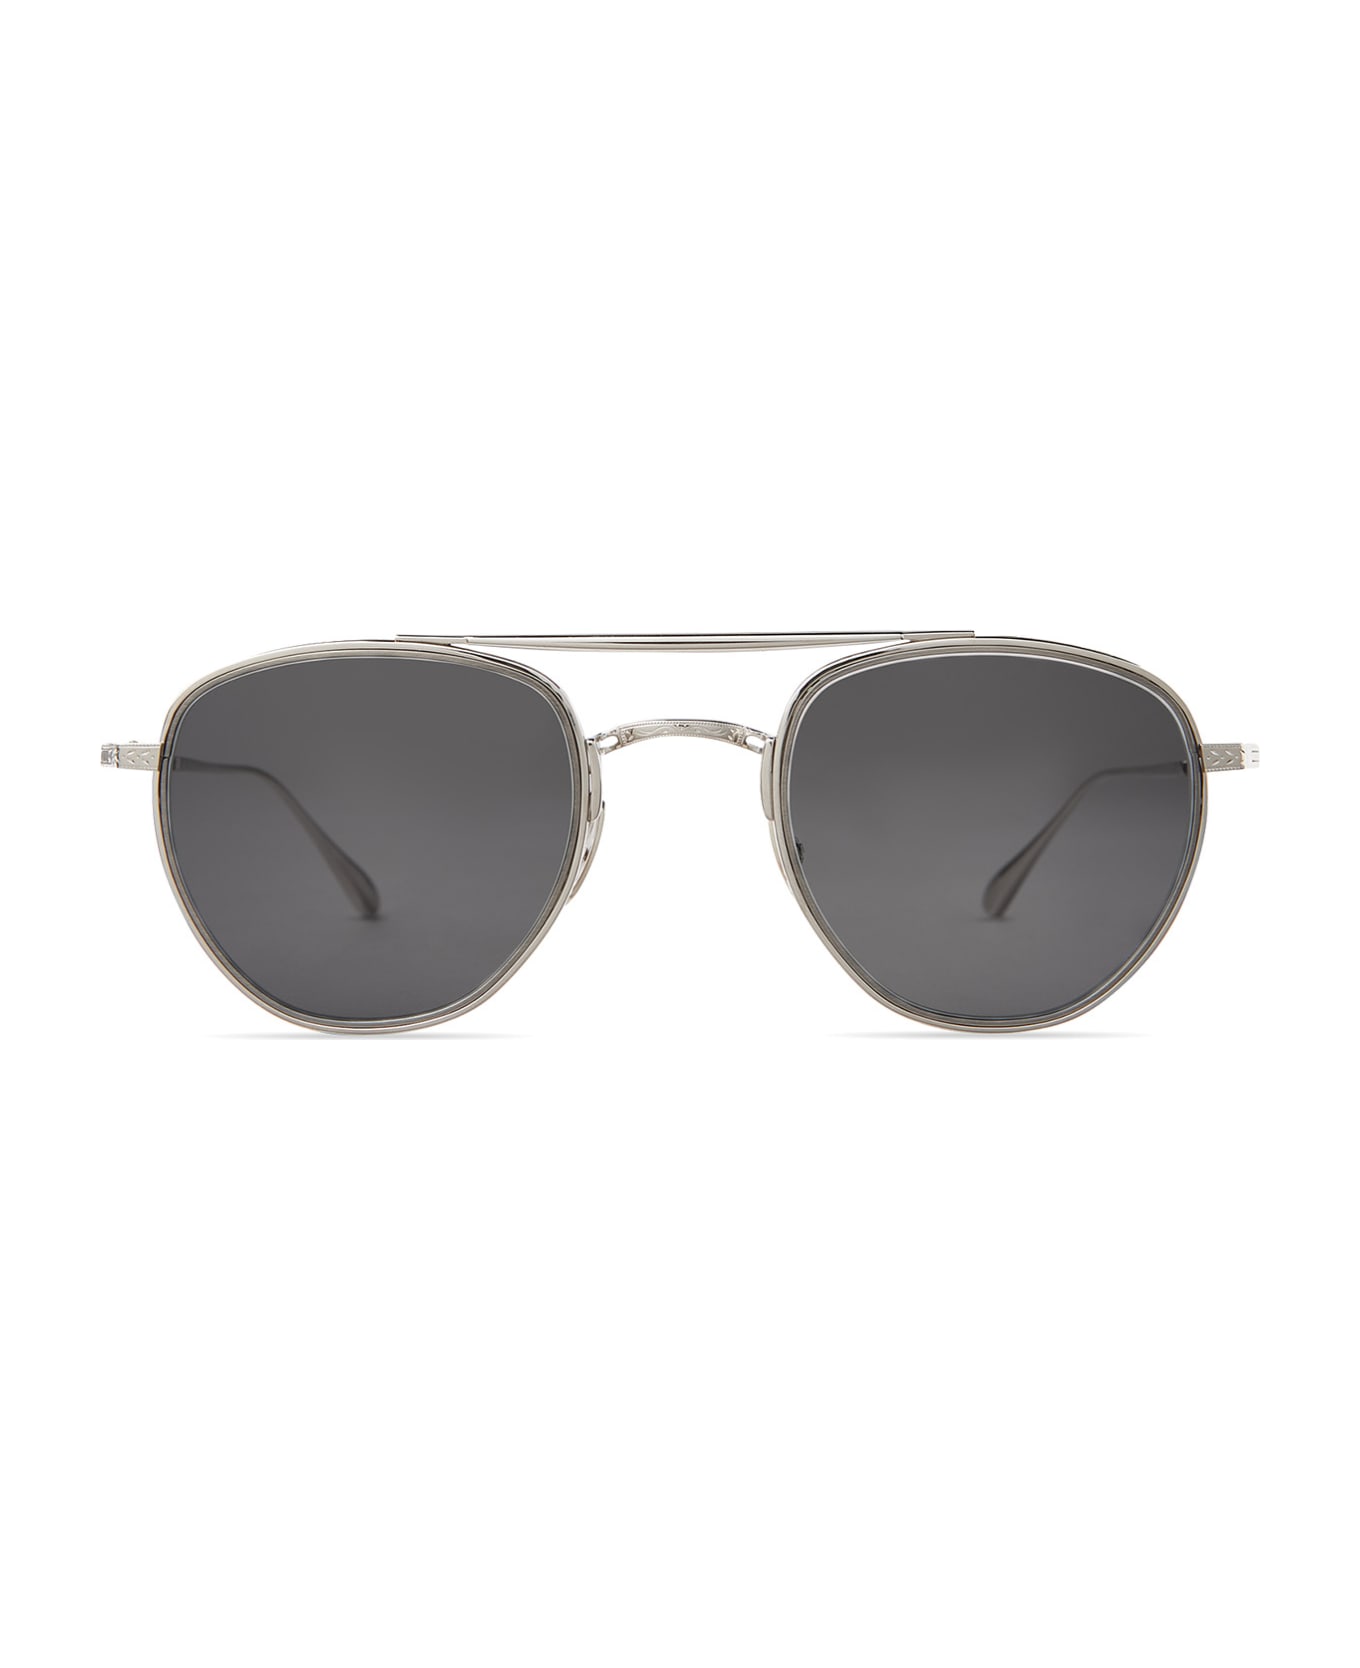 Mr. Leight Roku Ii S Platinum-pewter Sunglasses - Platinum-Pewter サングラス